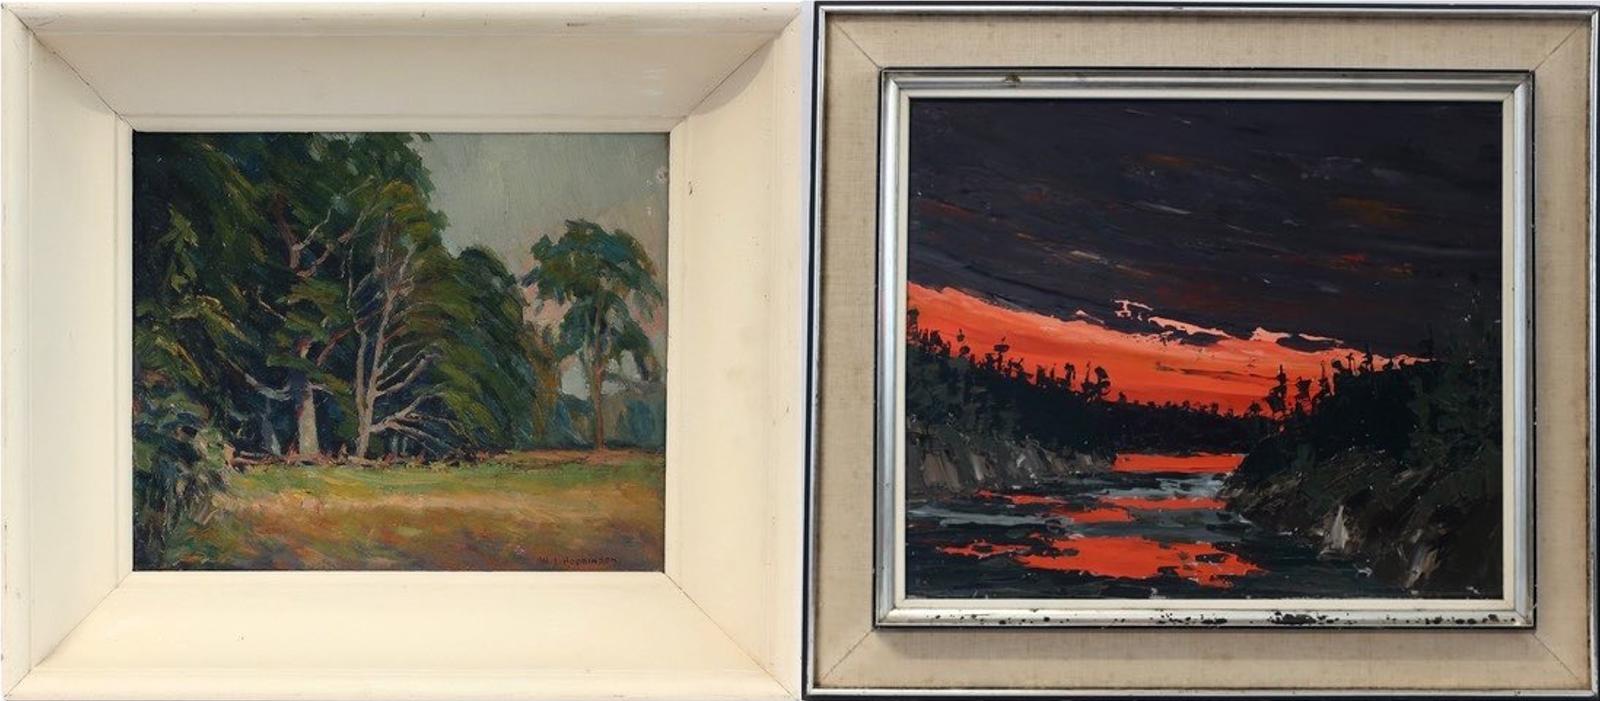 William John Hopkinson (1887-1970) - Untitled (Summer Landscape) & Evening Fire (French River)